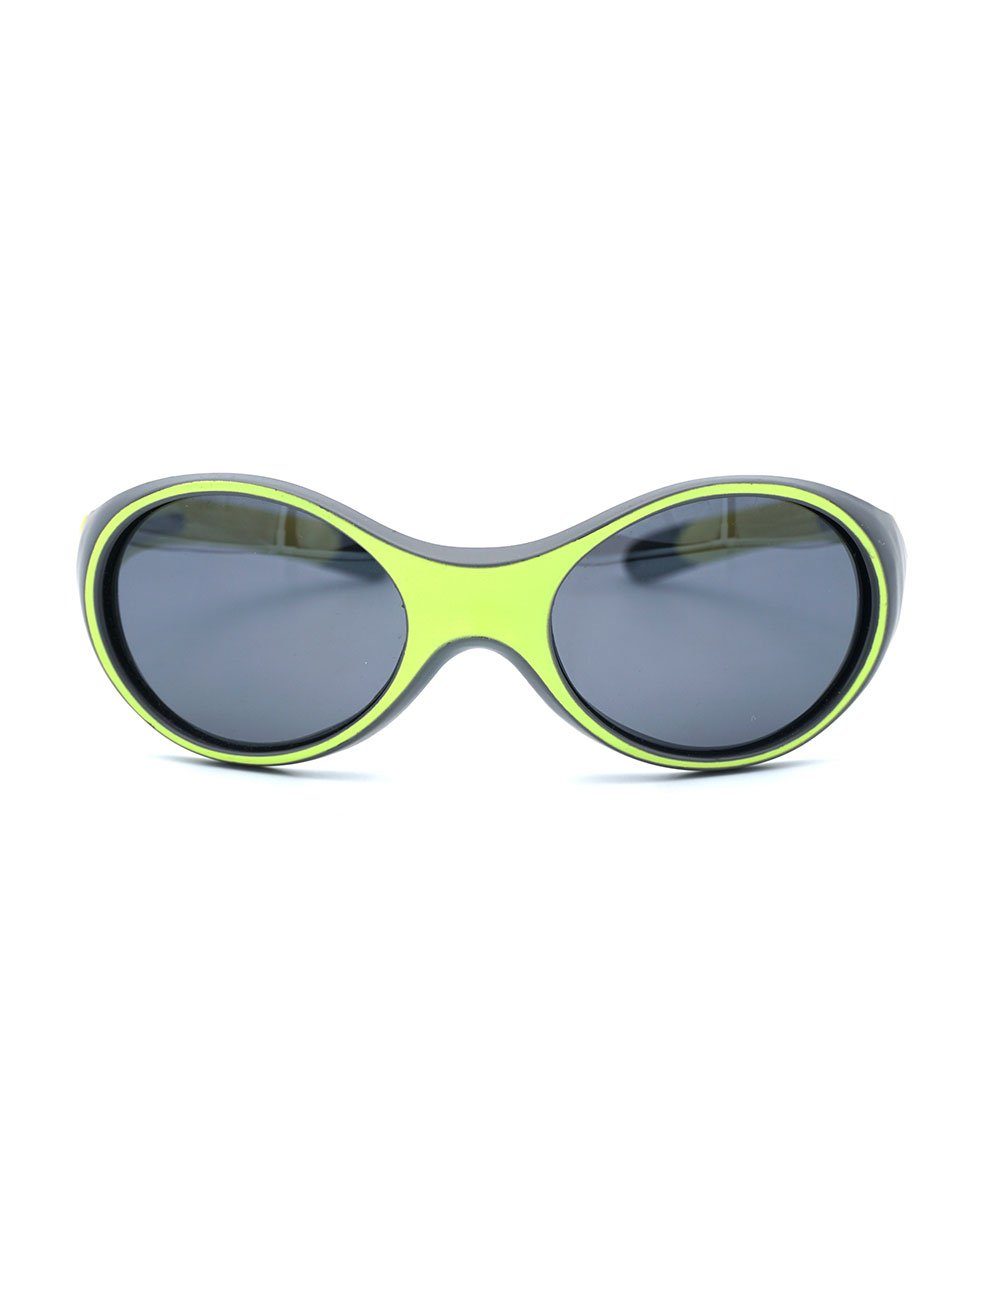 MAXIMO Sonnenbrille KIDS-Sonnenbrille 'sporty' grey green/dark bright inkl.Box,Microfaserb